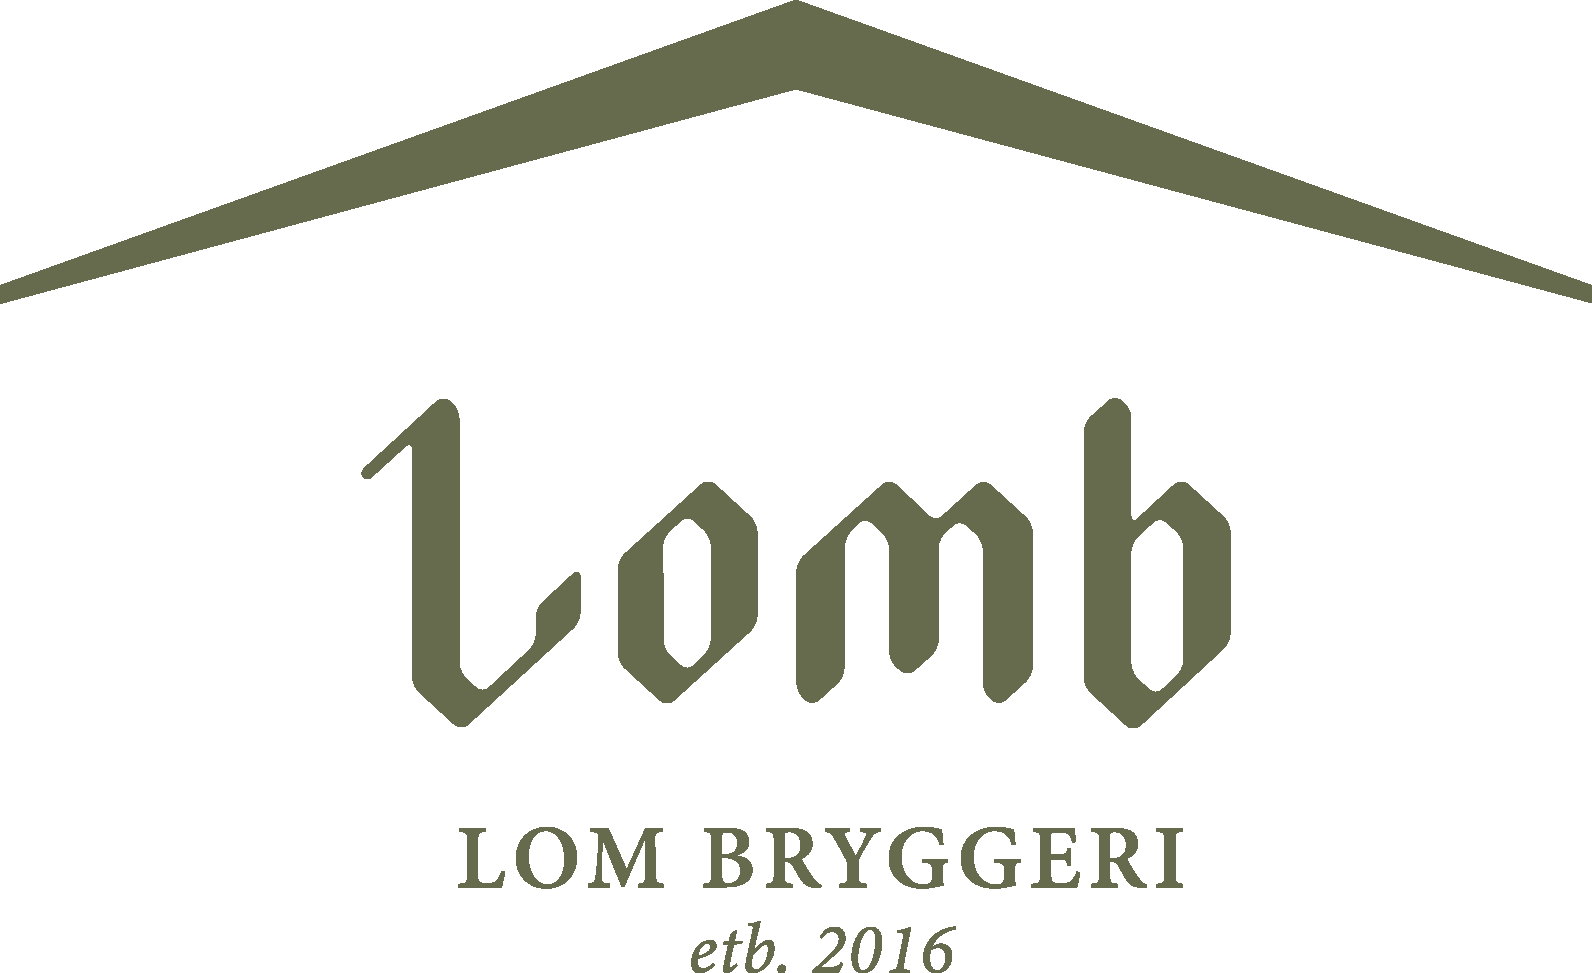 Lom bryggeri